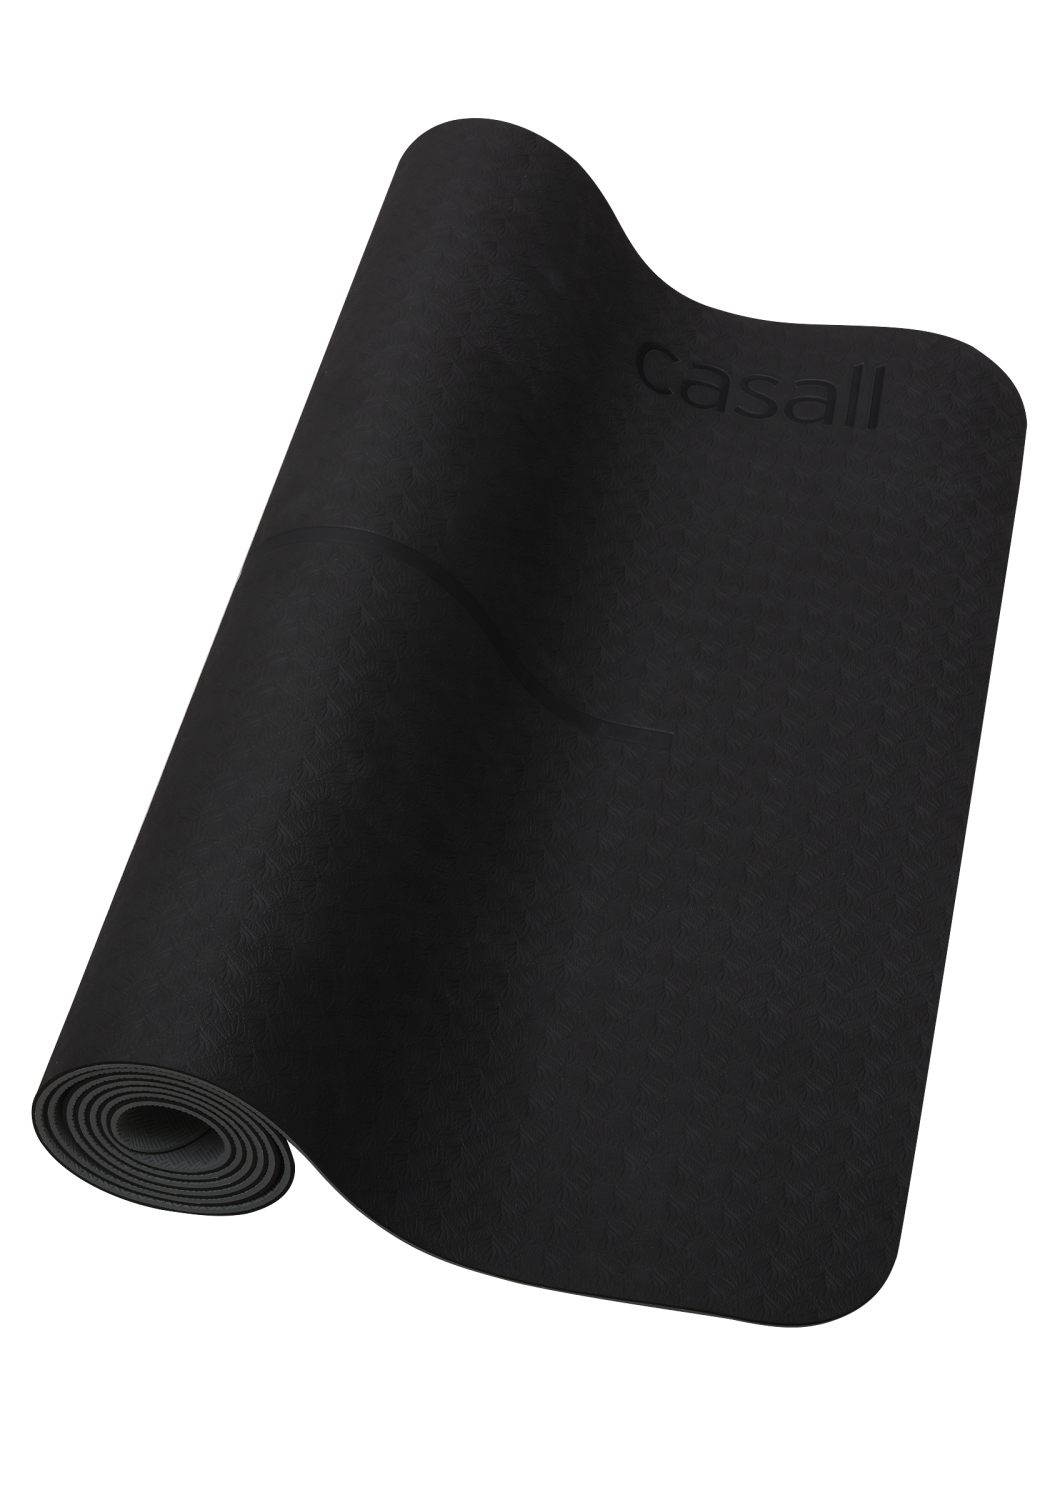 Yoga Mat Position 4mm "Black/Grey" - Casall